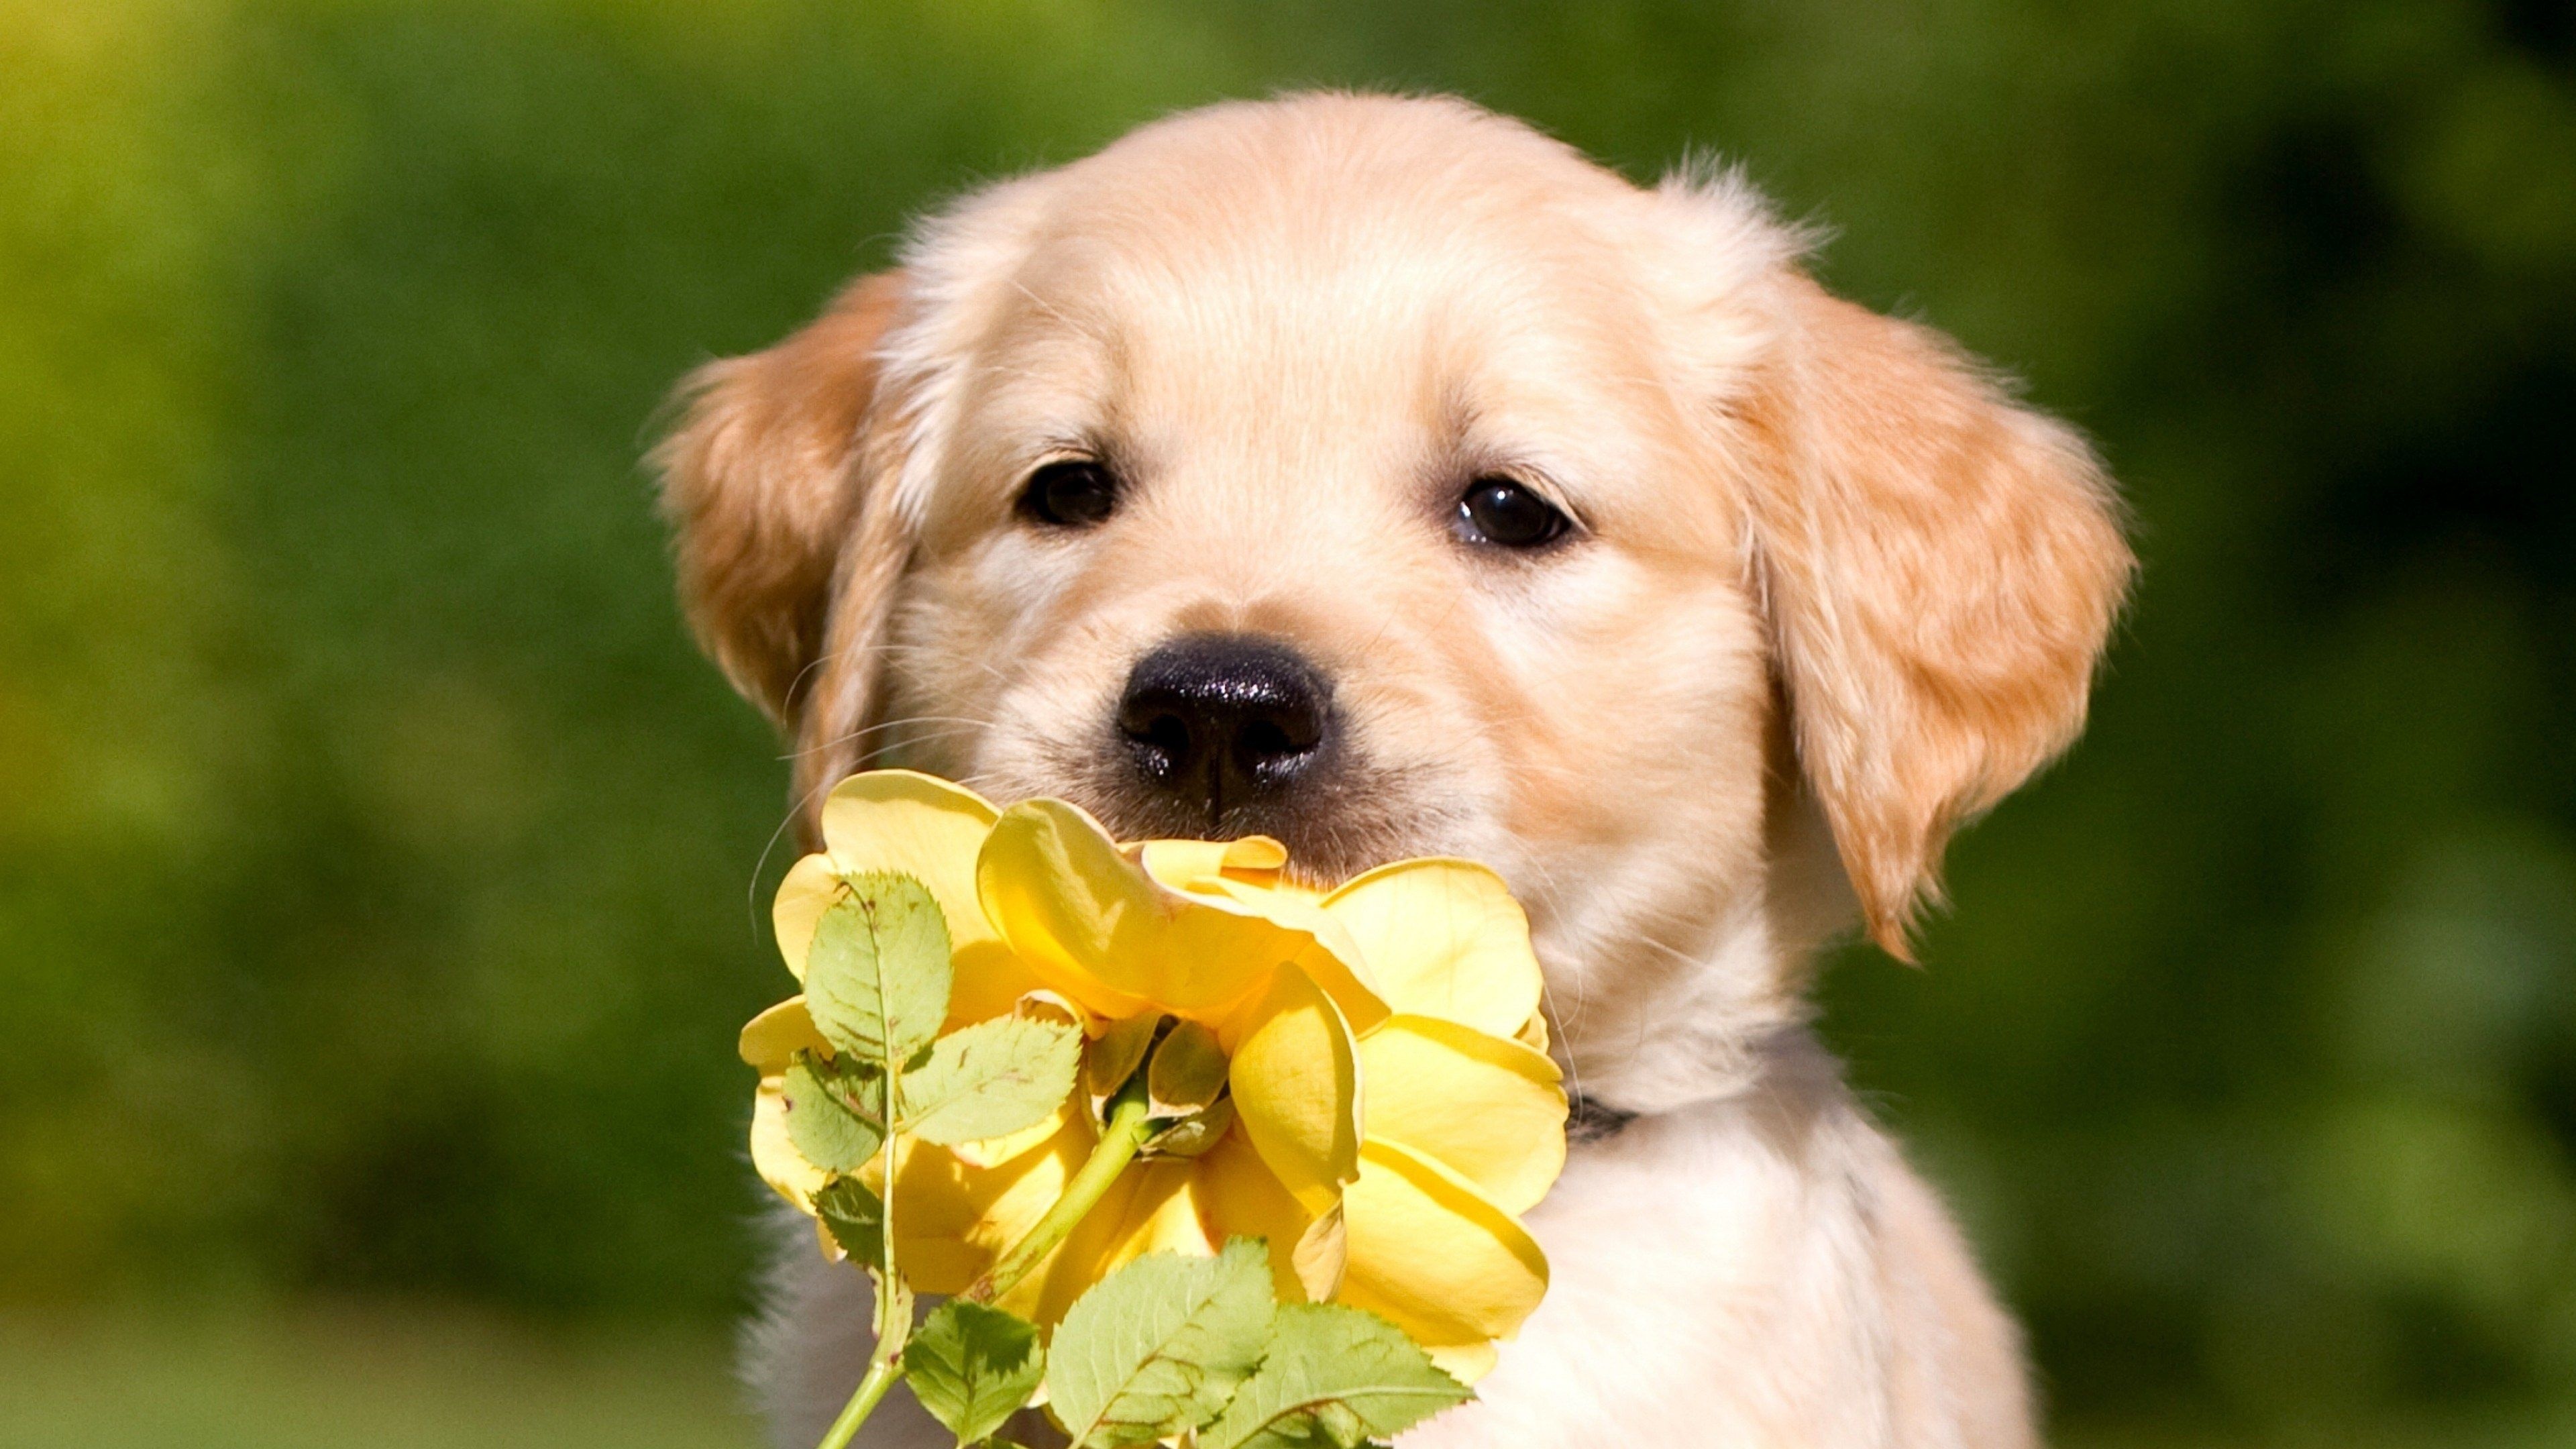 Labrador Retriever wallpaper, Cute animals, Funny dog pictures, Adorable puppies, 3840x2160 4K Desktop